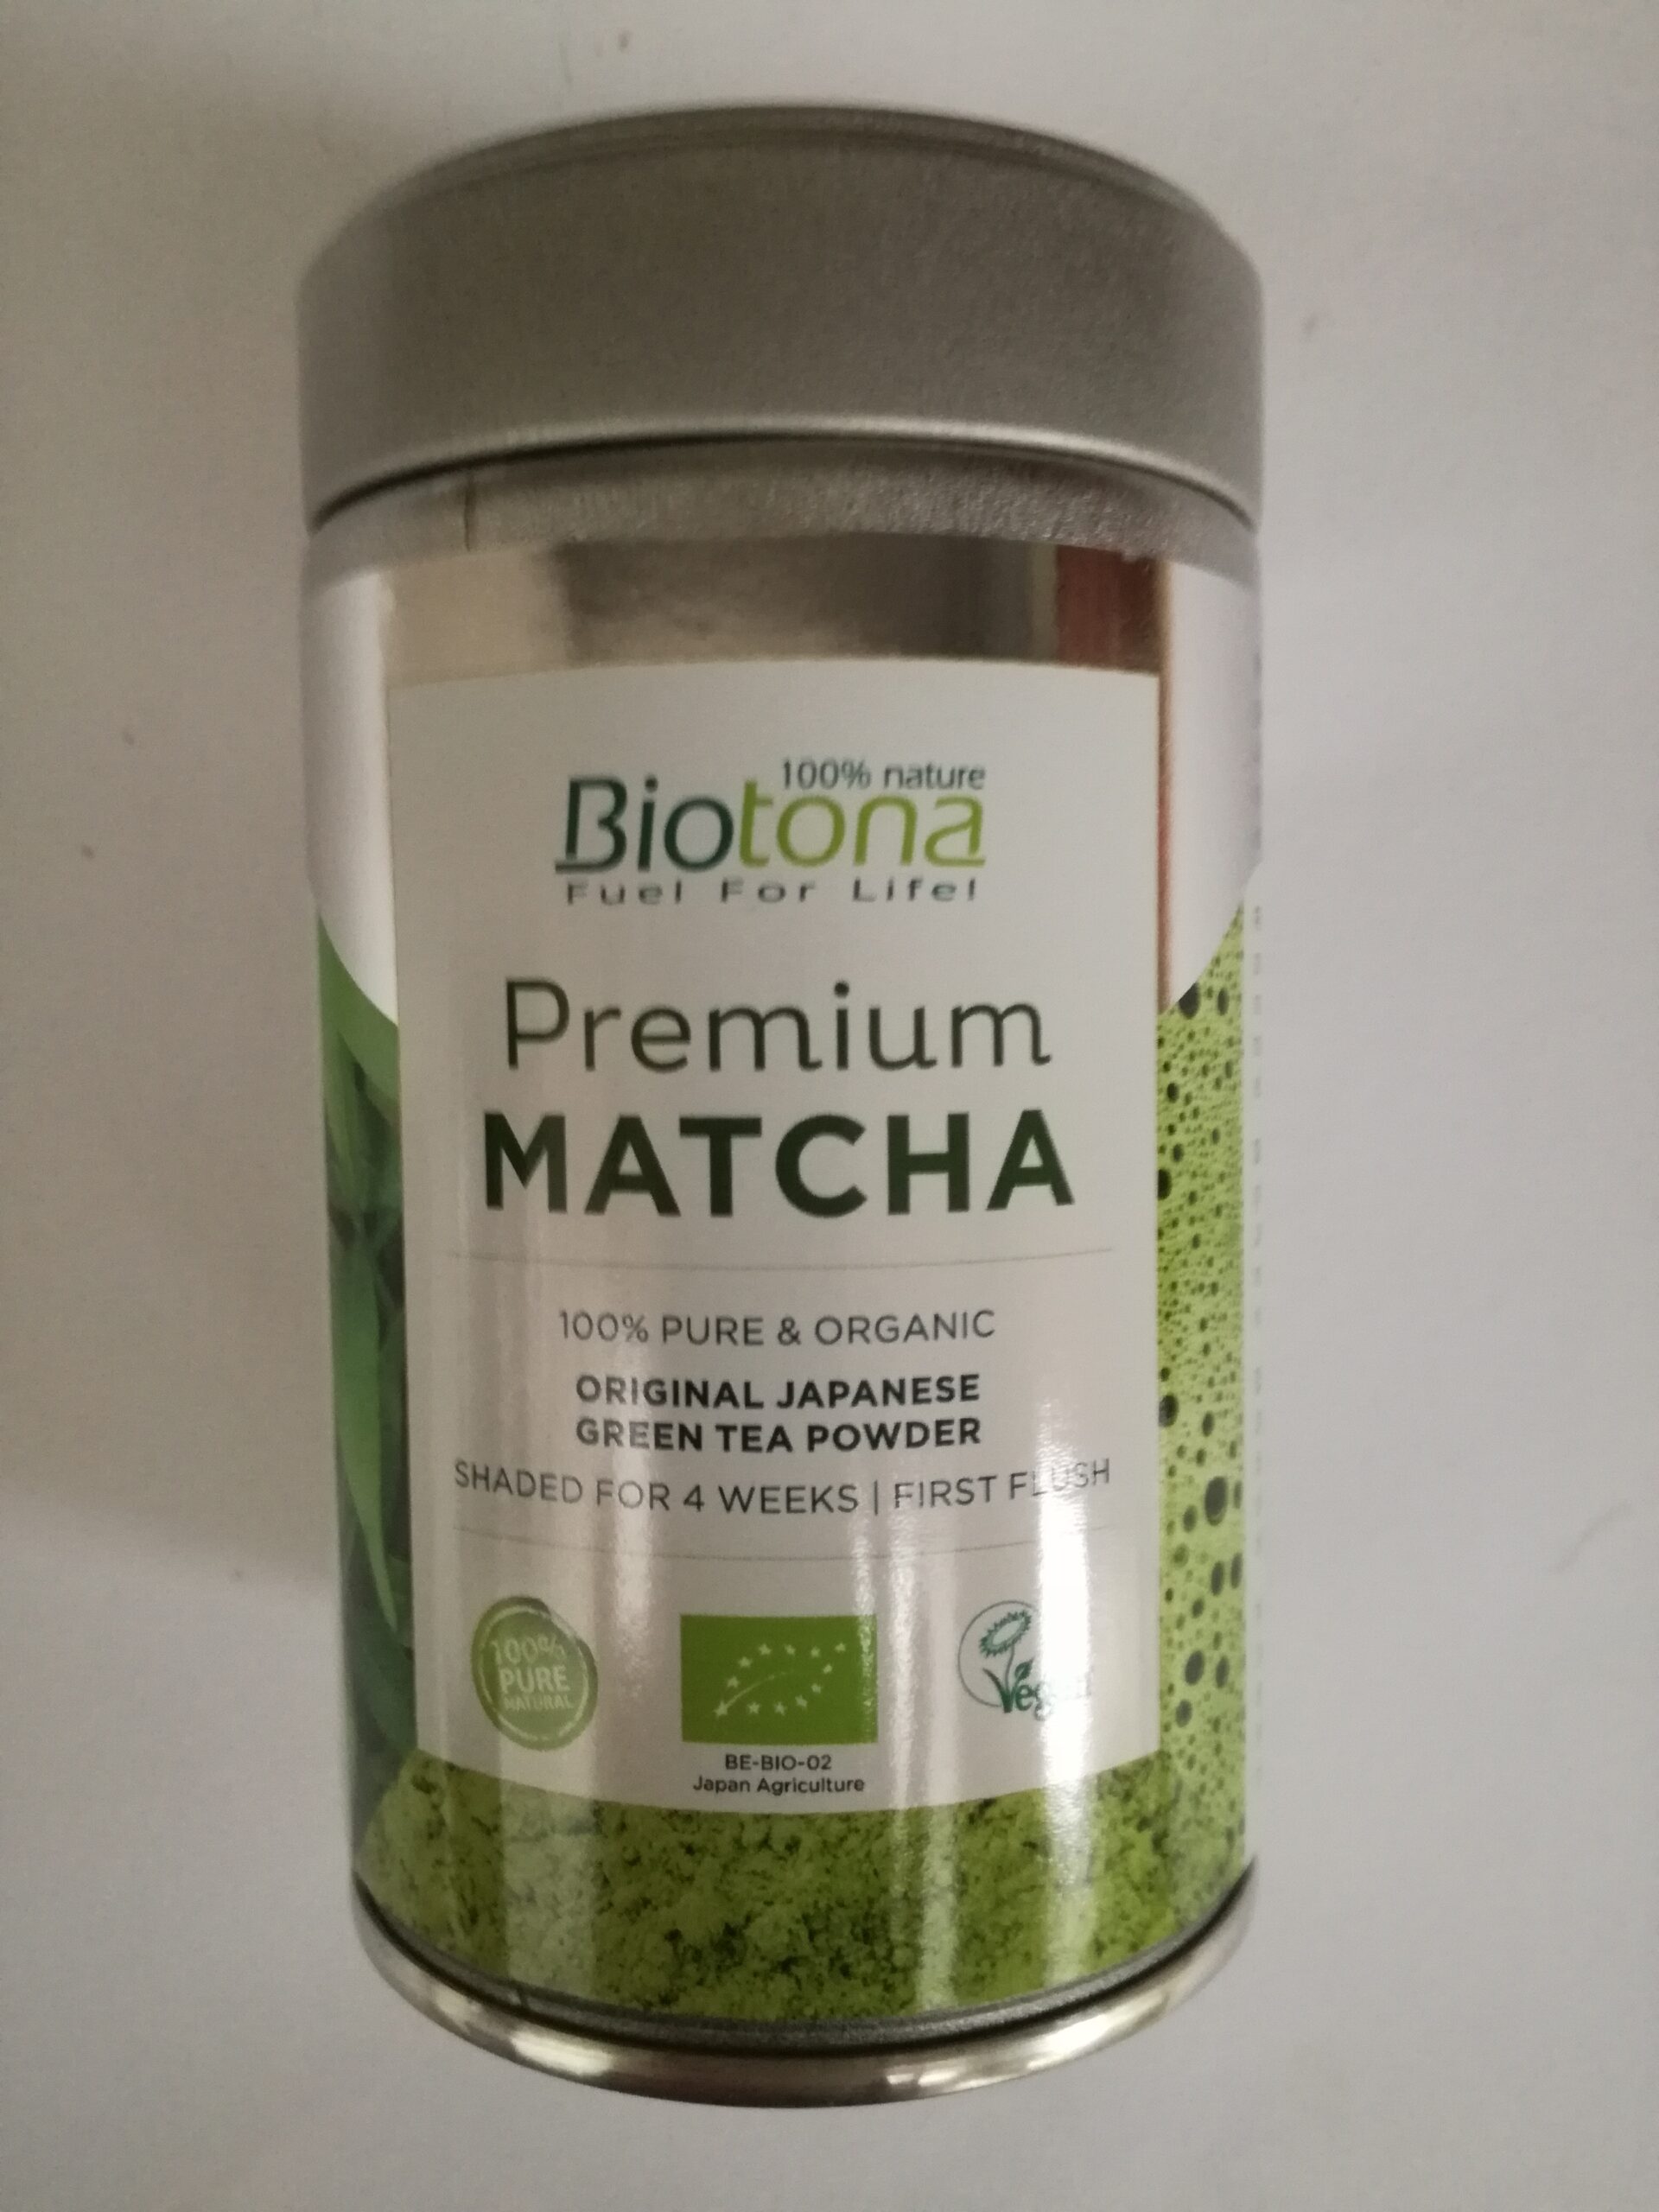 Premium Matcha - Biotona